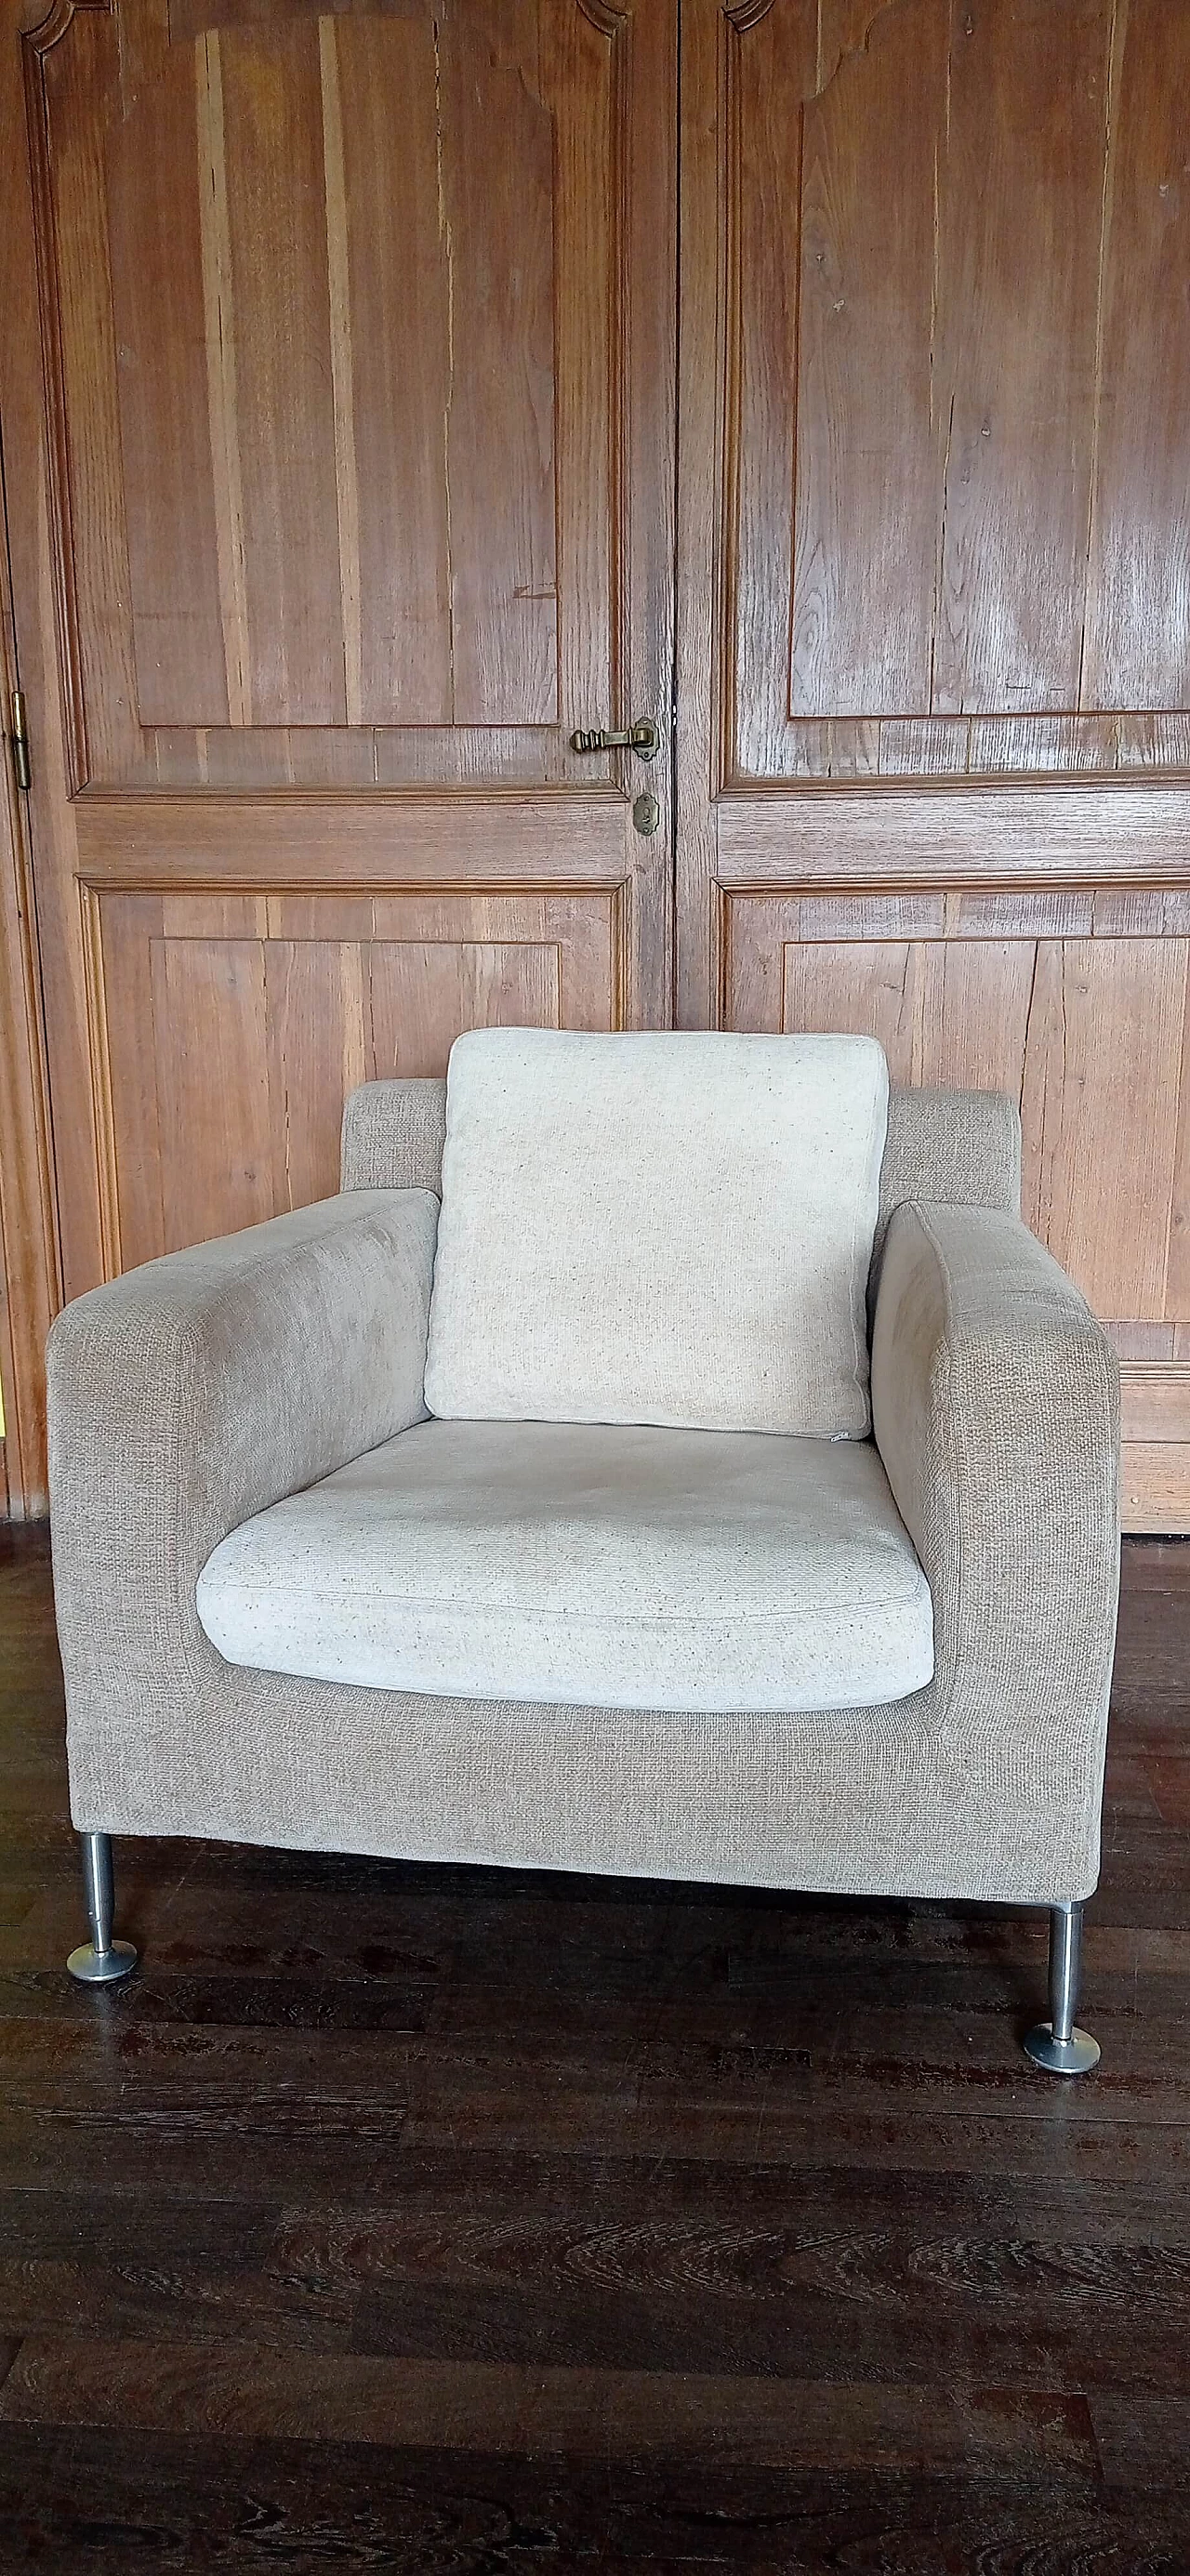 Harry armchair by Antonio Citterio for B&B Italia in Maxalto fabric 2